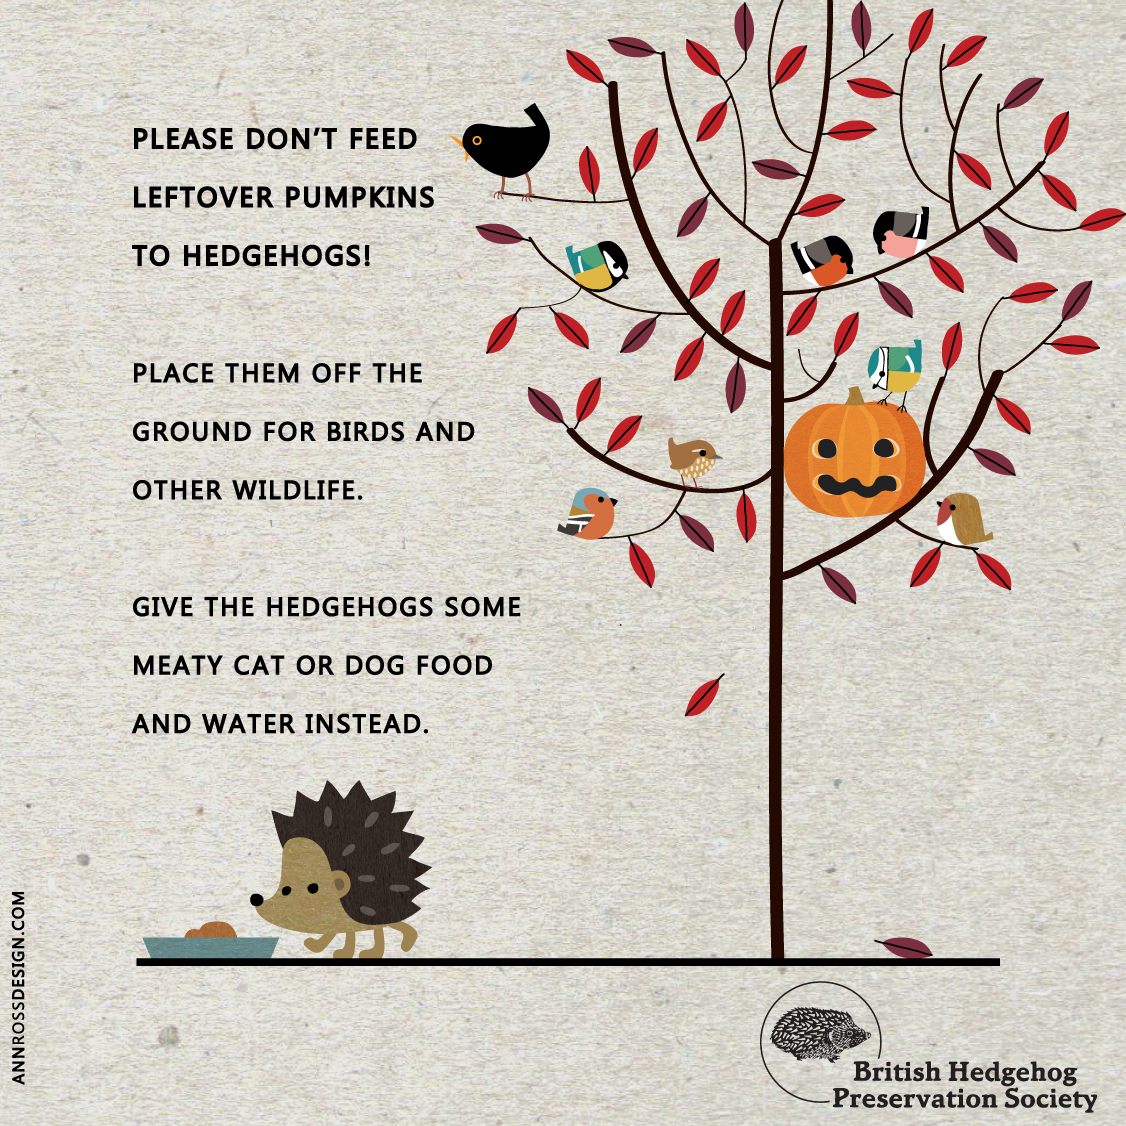 Some pumpkin 🎃 advice to help hedgehogs 🦔 this #Halloween